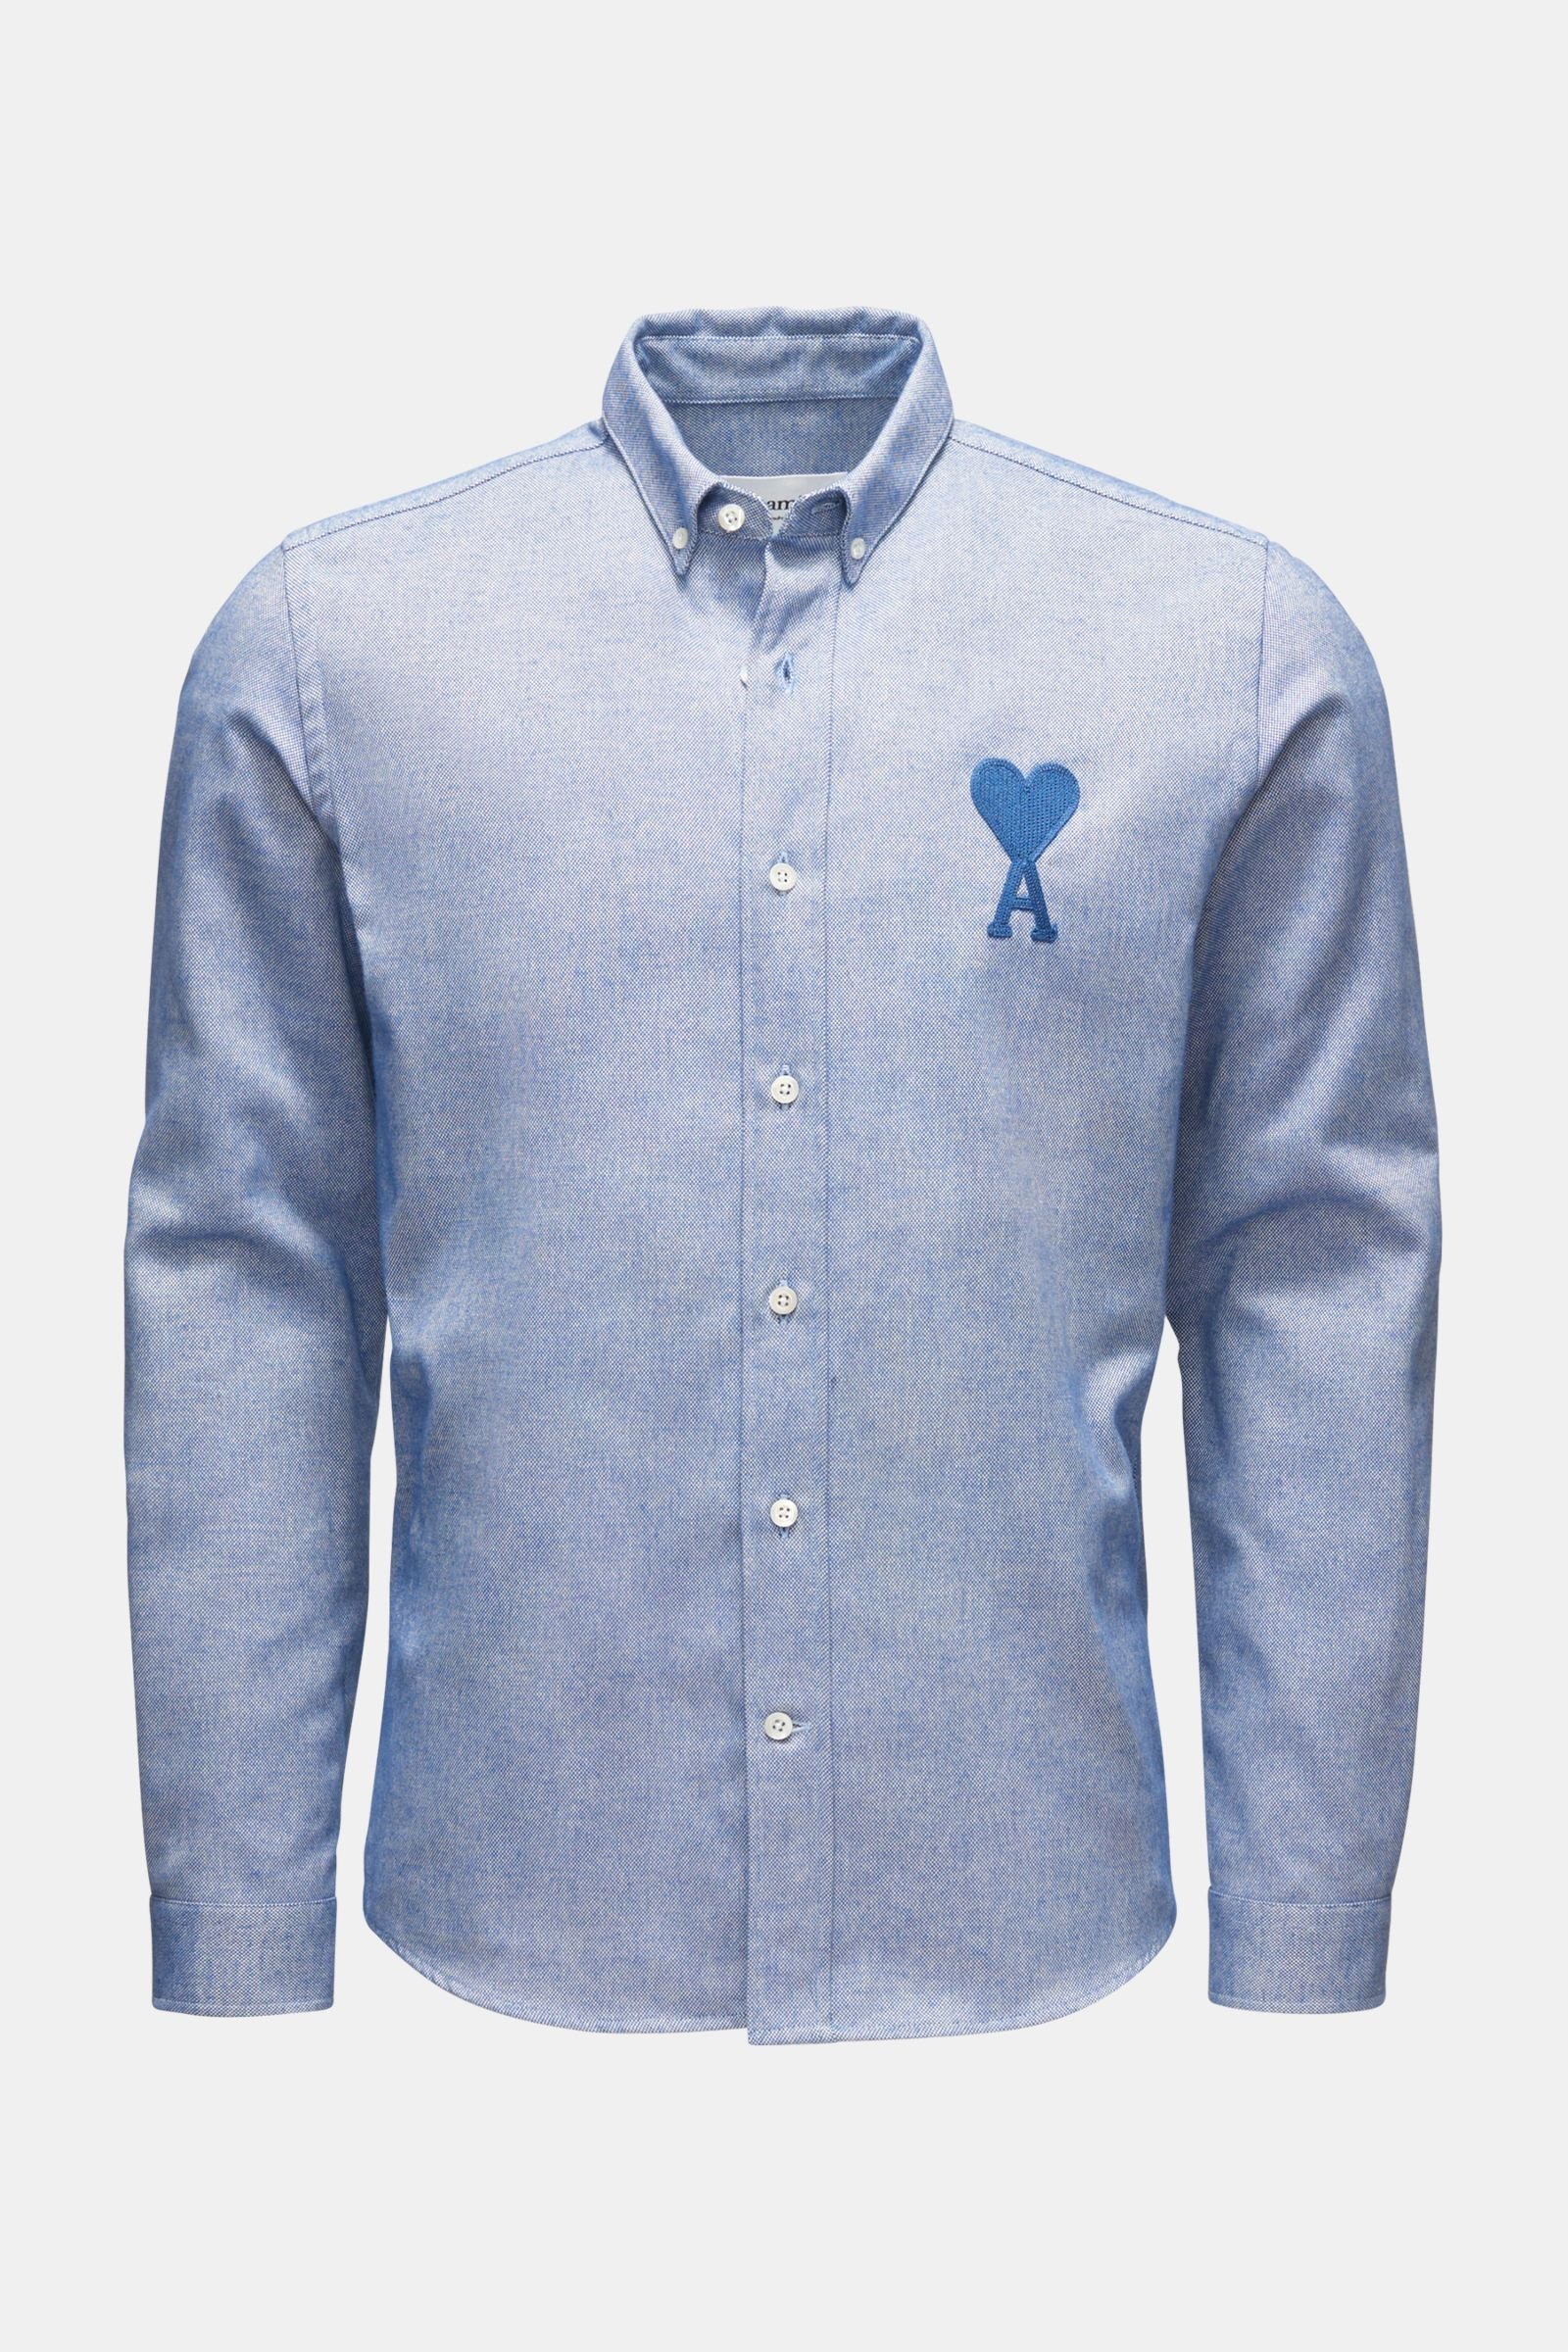 AMI PARIS Oxford shirt button-down collar smoky blue | BRAUN Hamburg